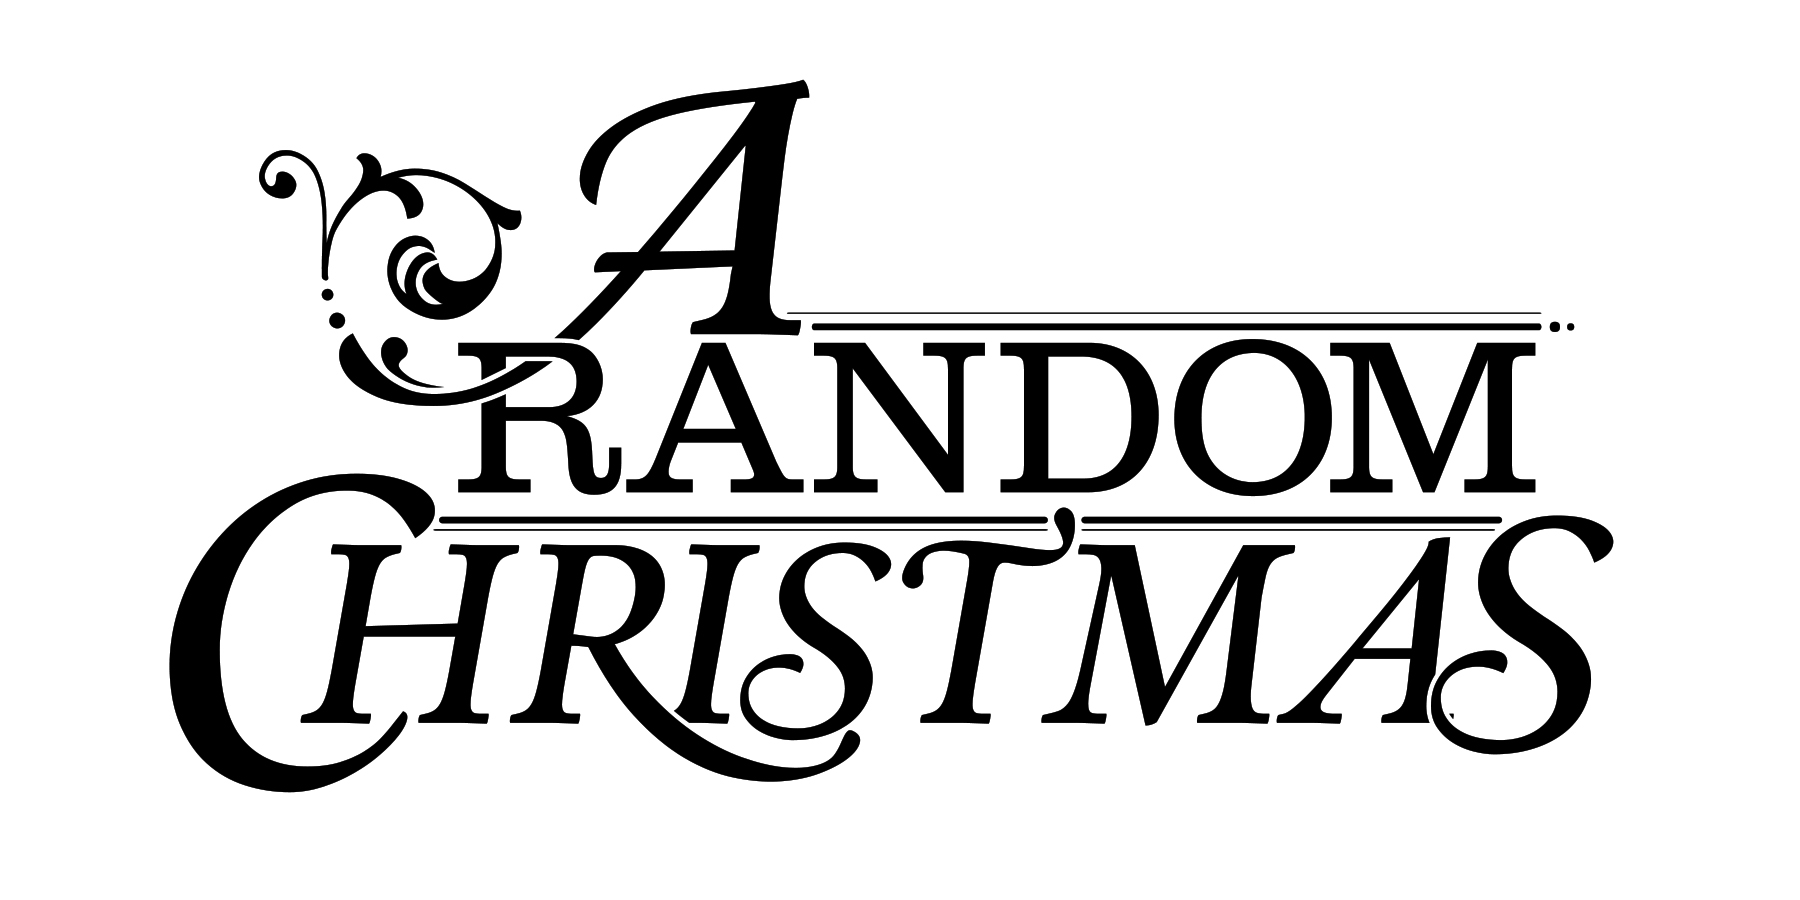 RandomChristmas-Logo-BW.jpg